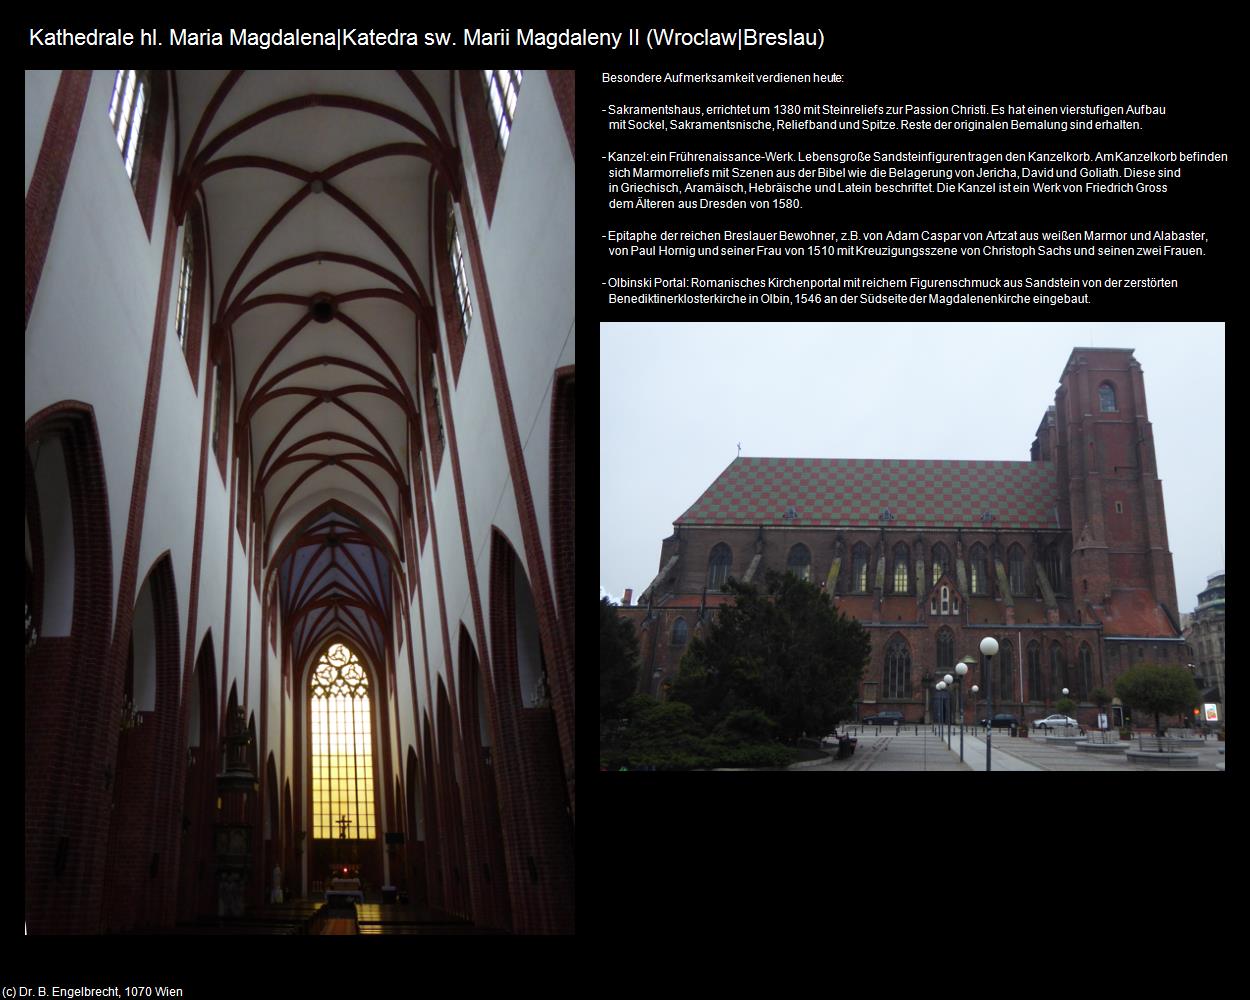 Kathedrale hl. Maria Magdalena II (Wroclaw|Breslau) in POLEN-Schlesien